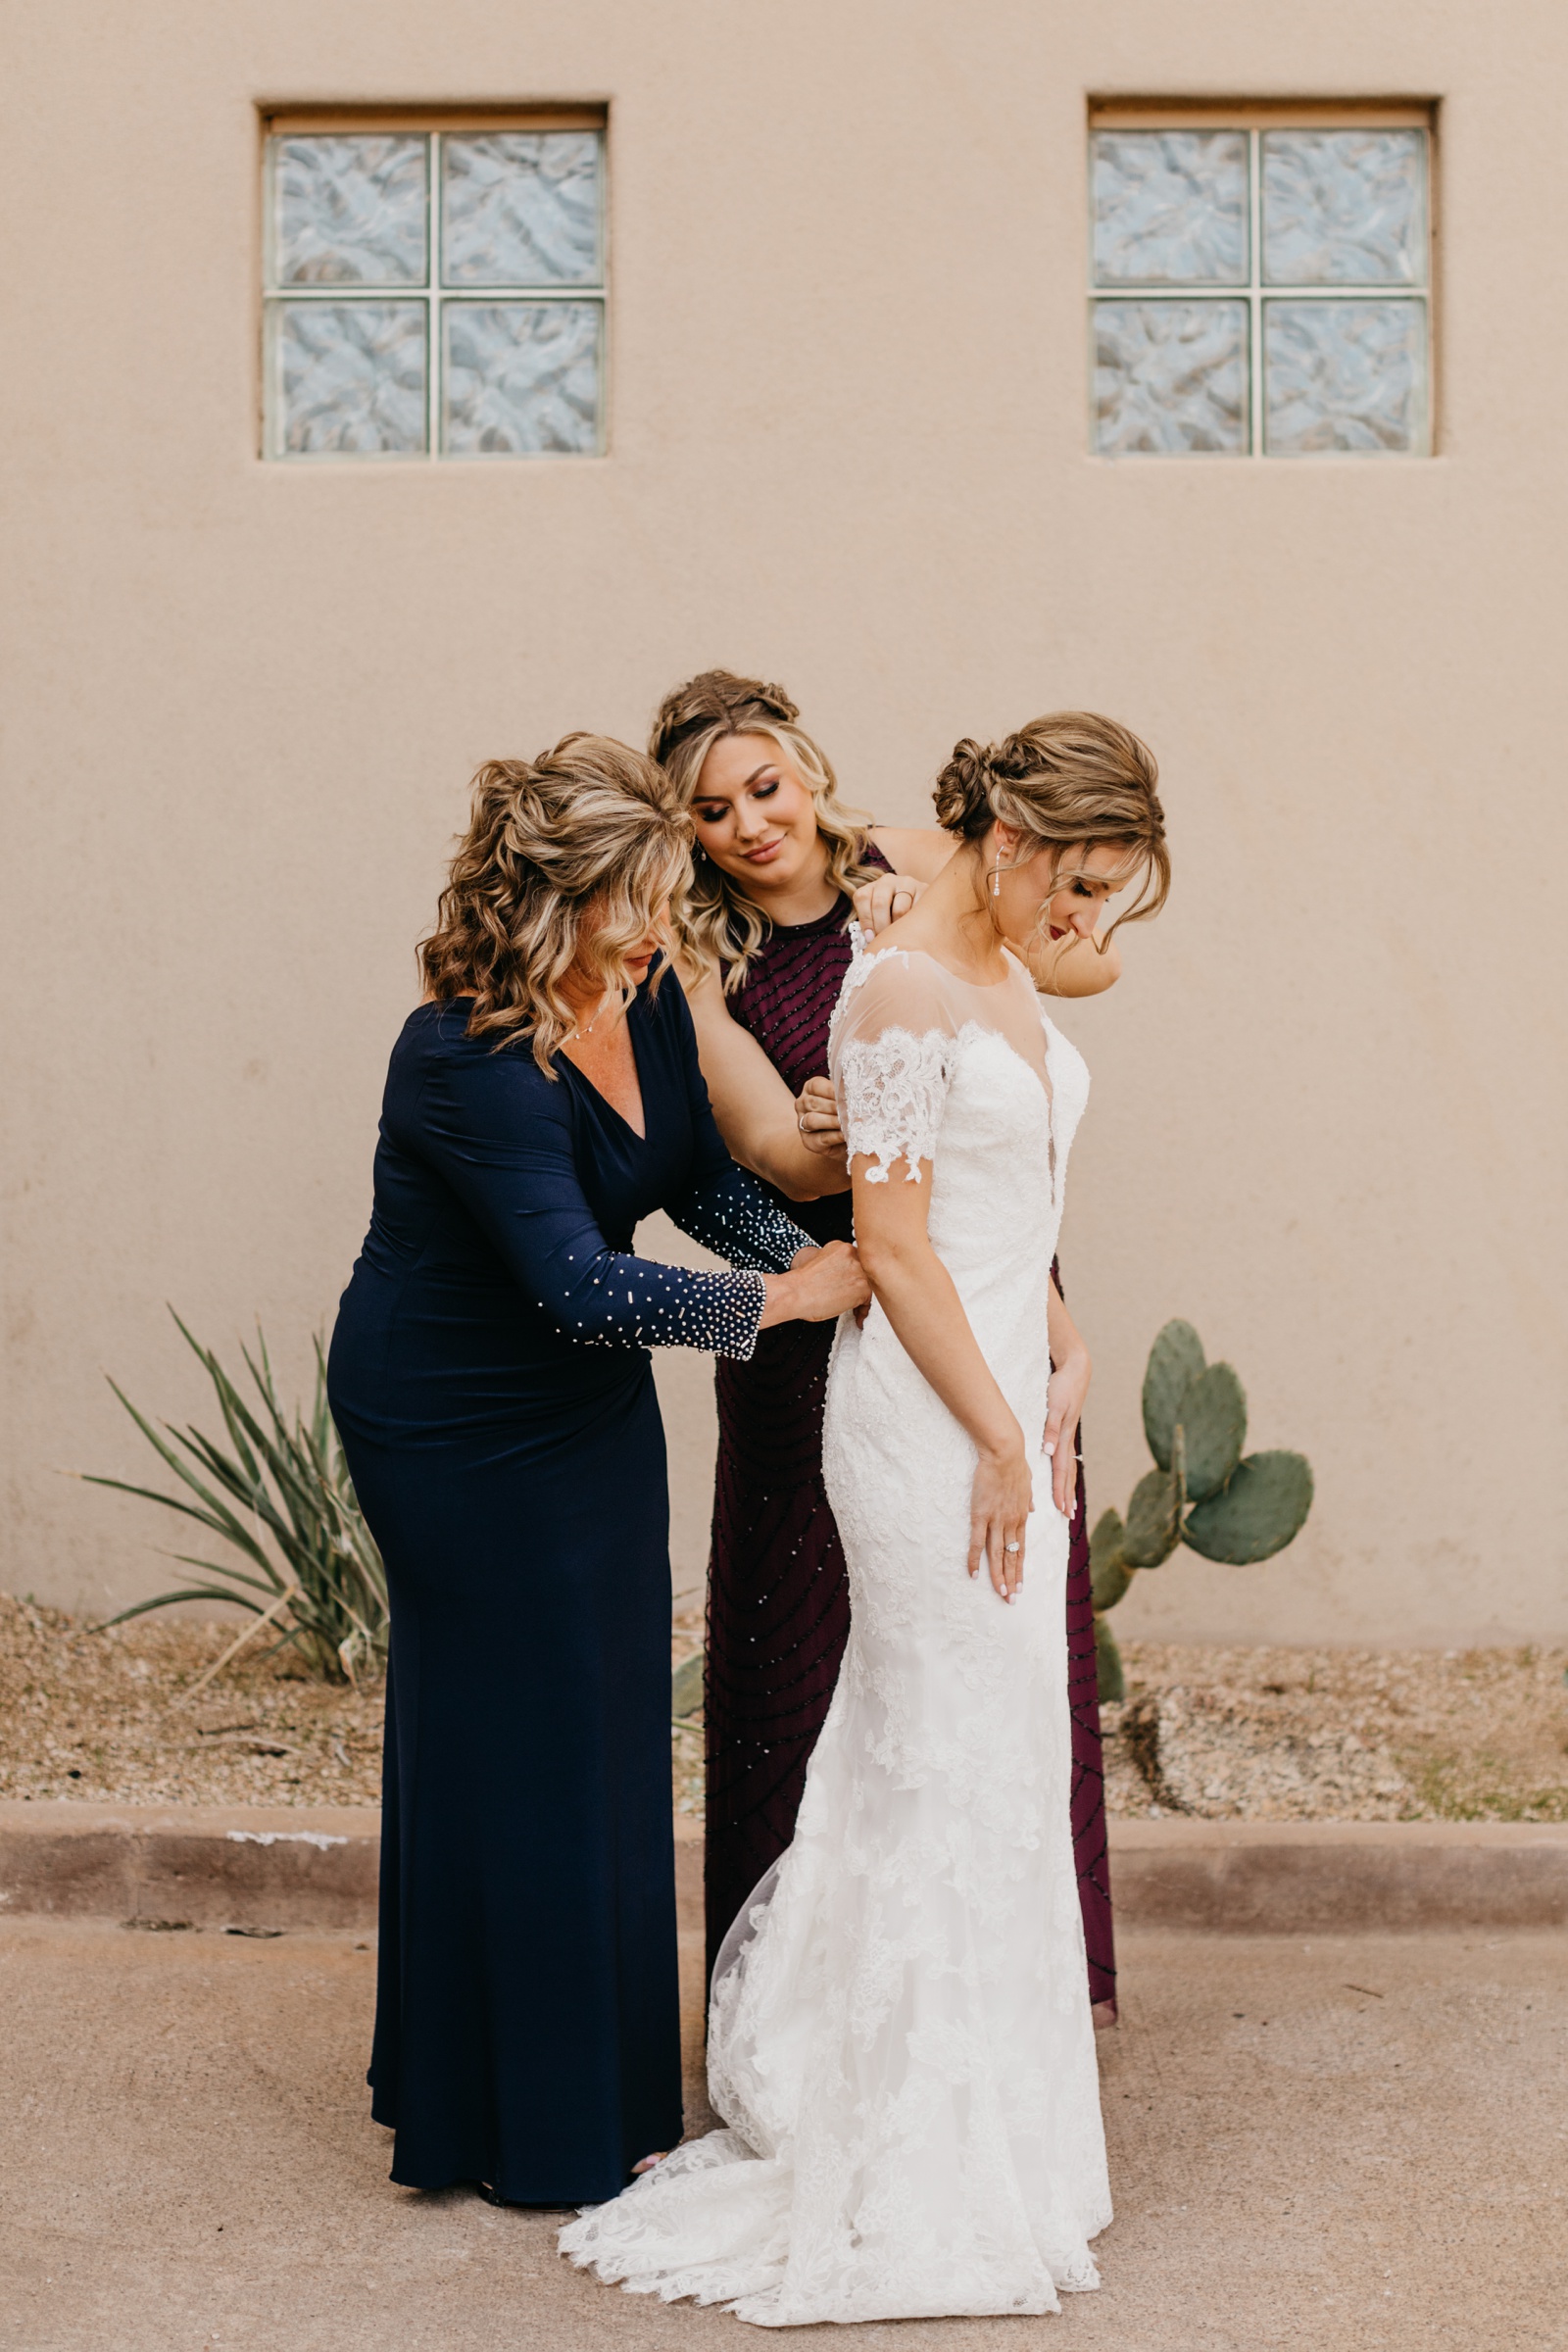 Mom zipping up bride at Scottsdale Arizona Wedding at Troon North Golf Club